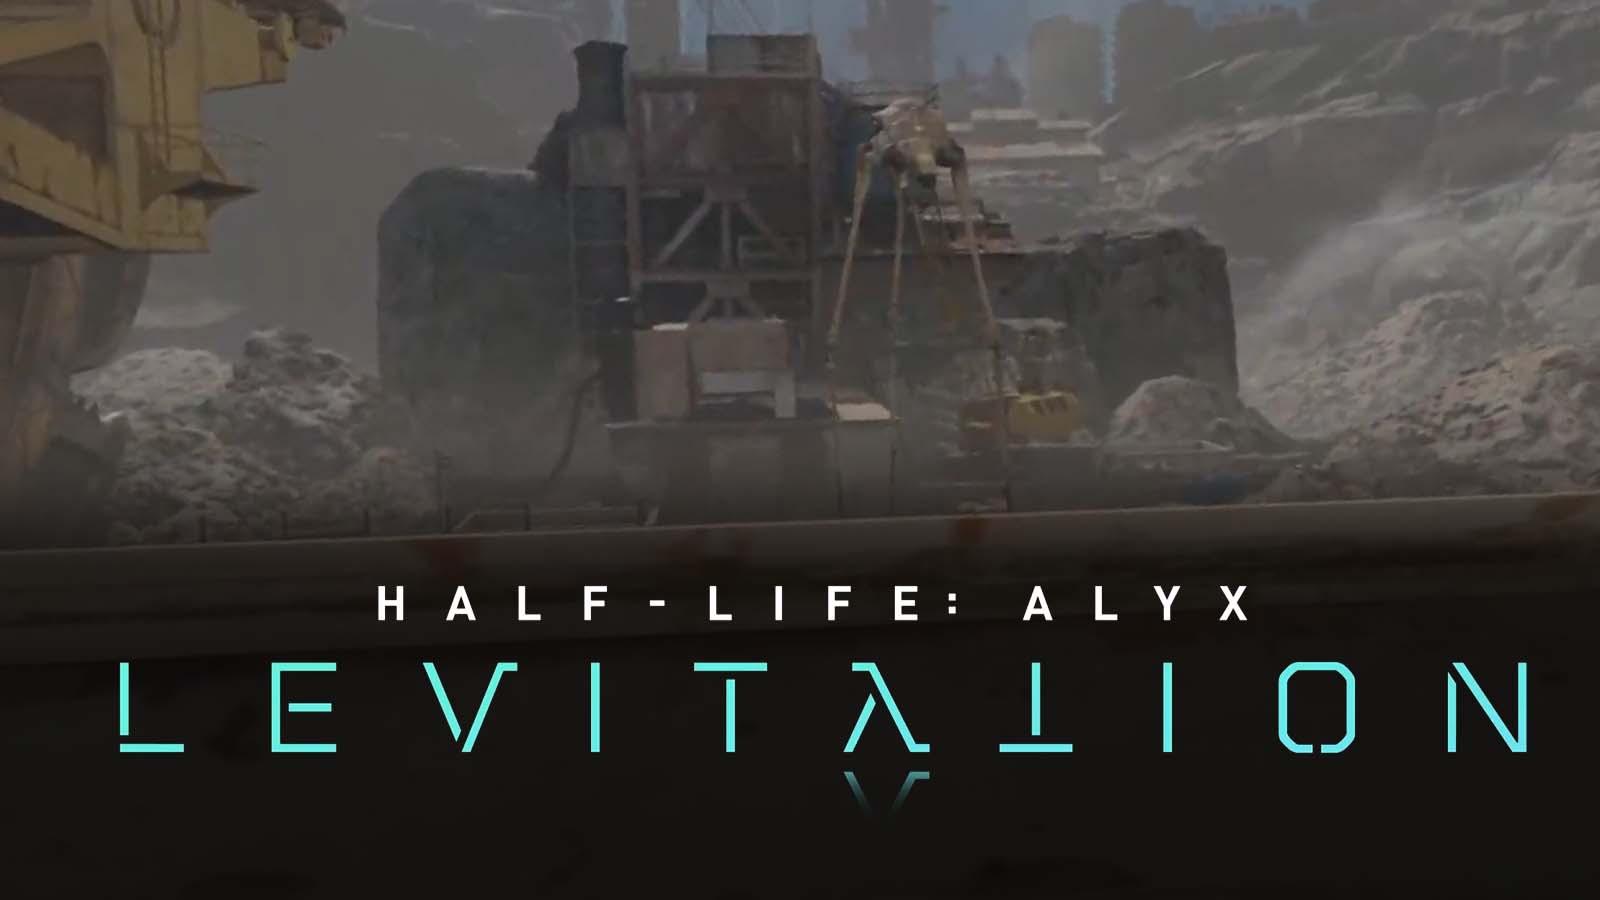 Half-Life Alyx: Levitation - Launch Trailer 